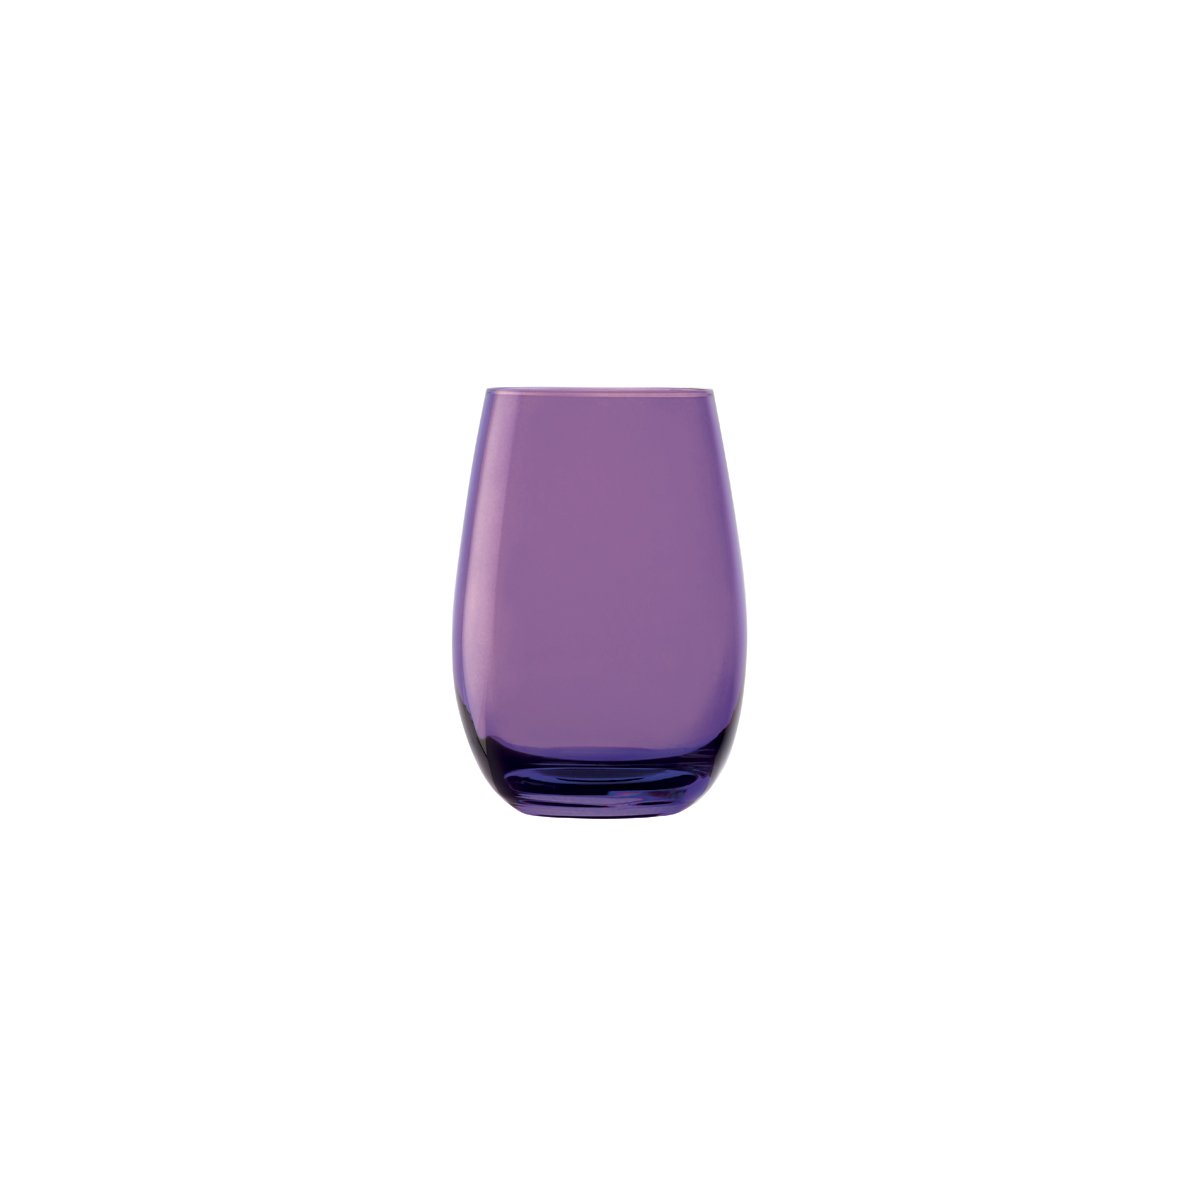 364-019 Stolzle Elements Tumbler Purple 465ml Tomkin Australia Hospitality Supplies